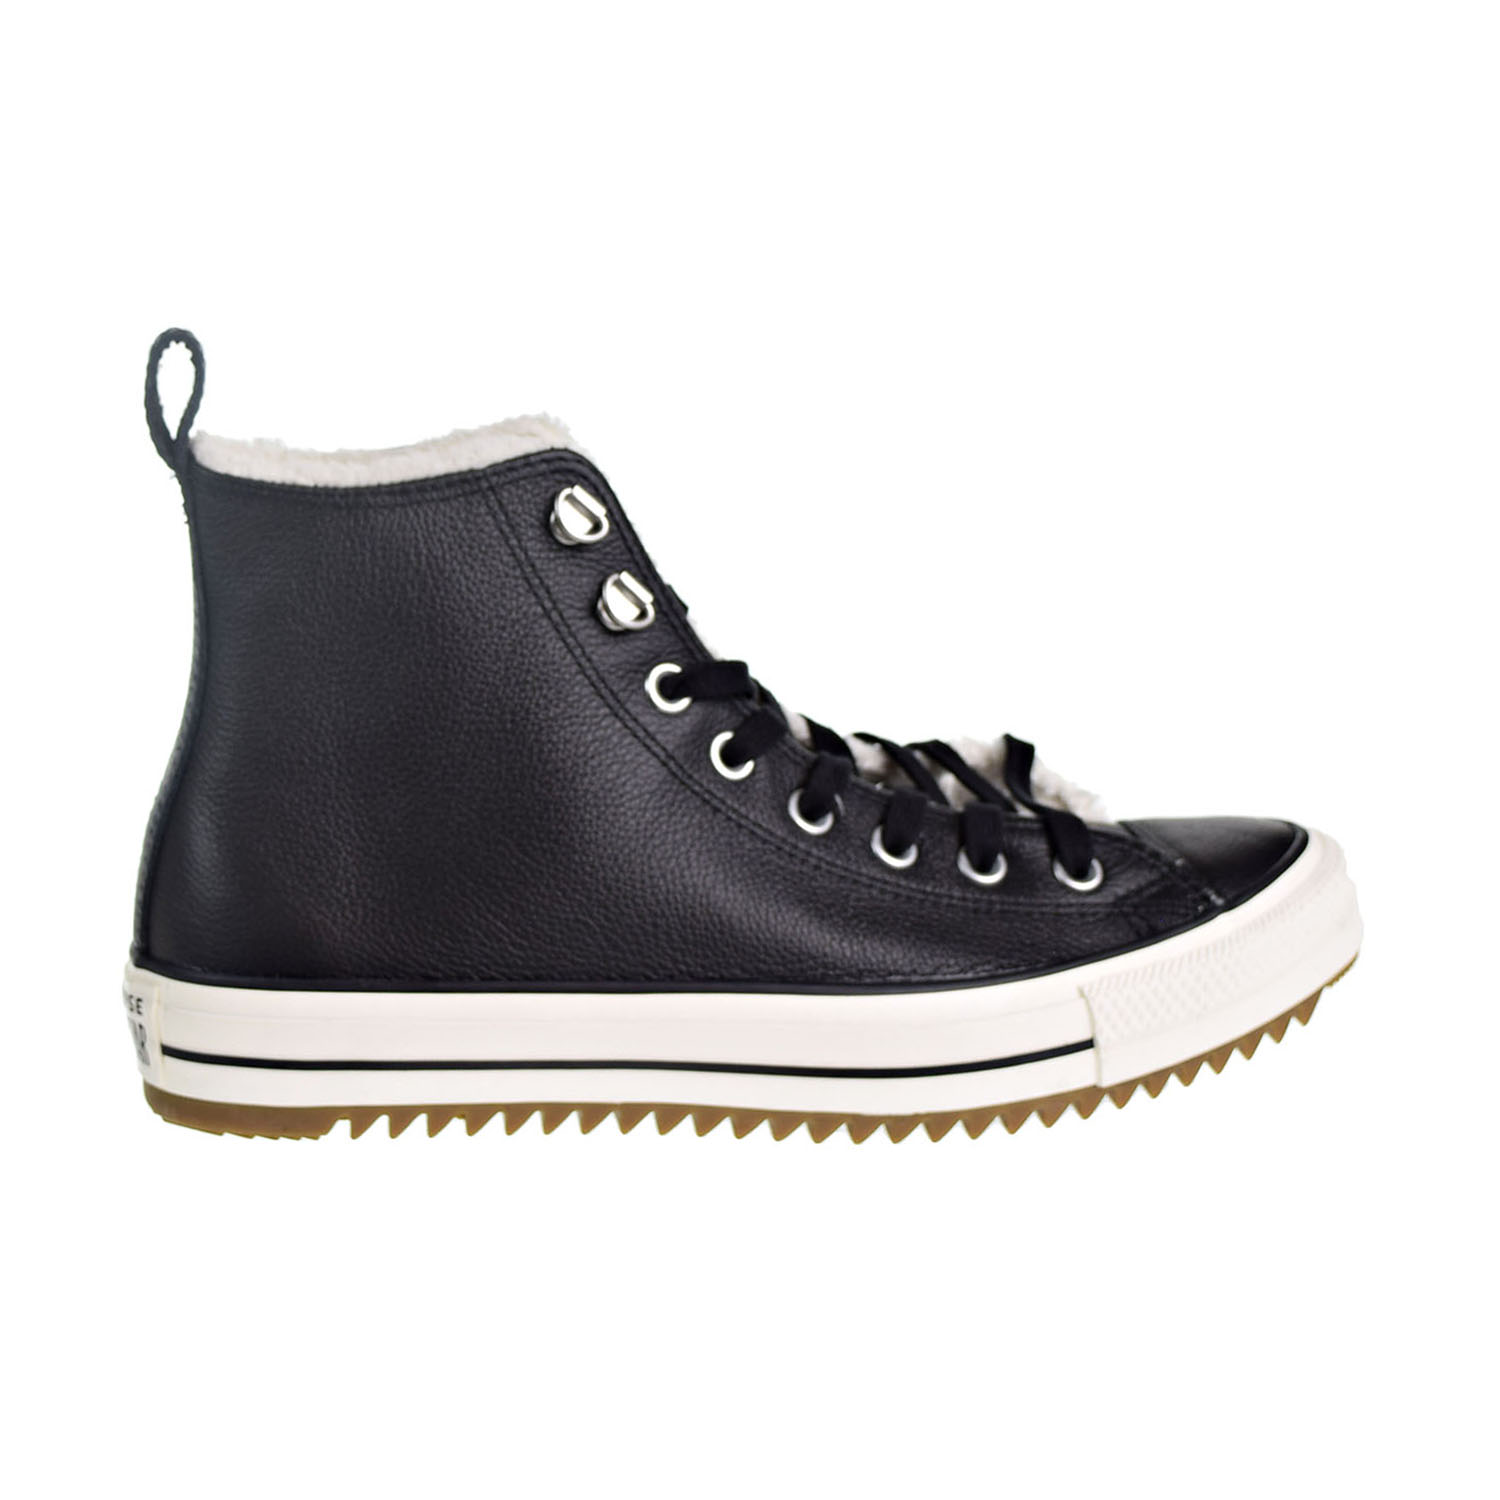 Converse Chuck Taylor All Star Hiker Boot Men's/Big Kids Shoes Black-Egret-Gum 161512c - image 1 of 6